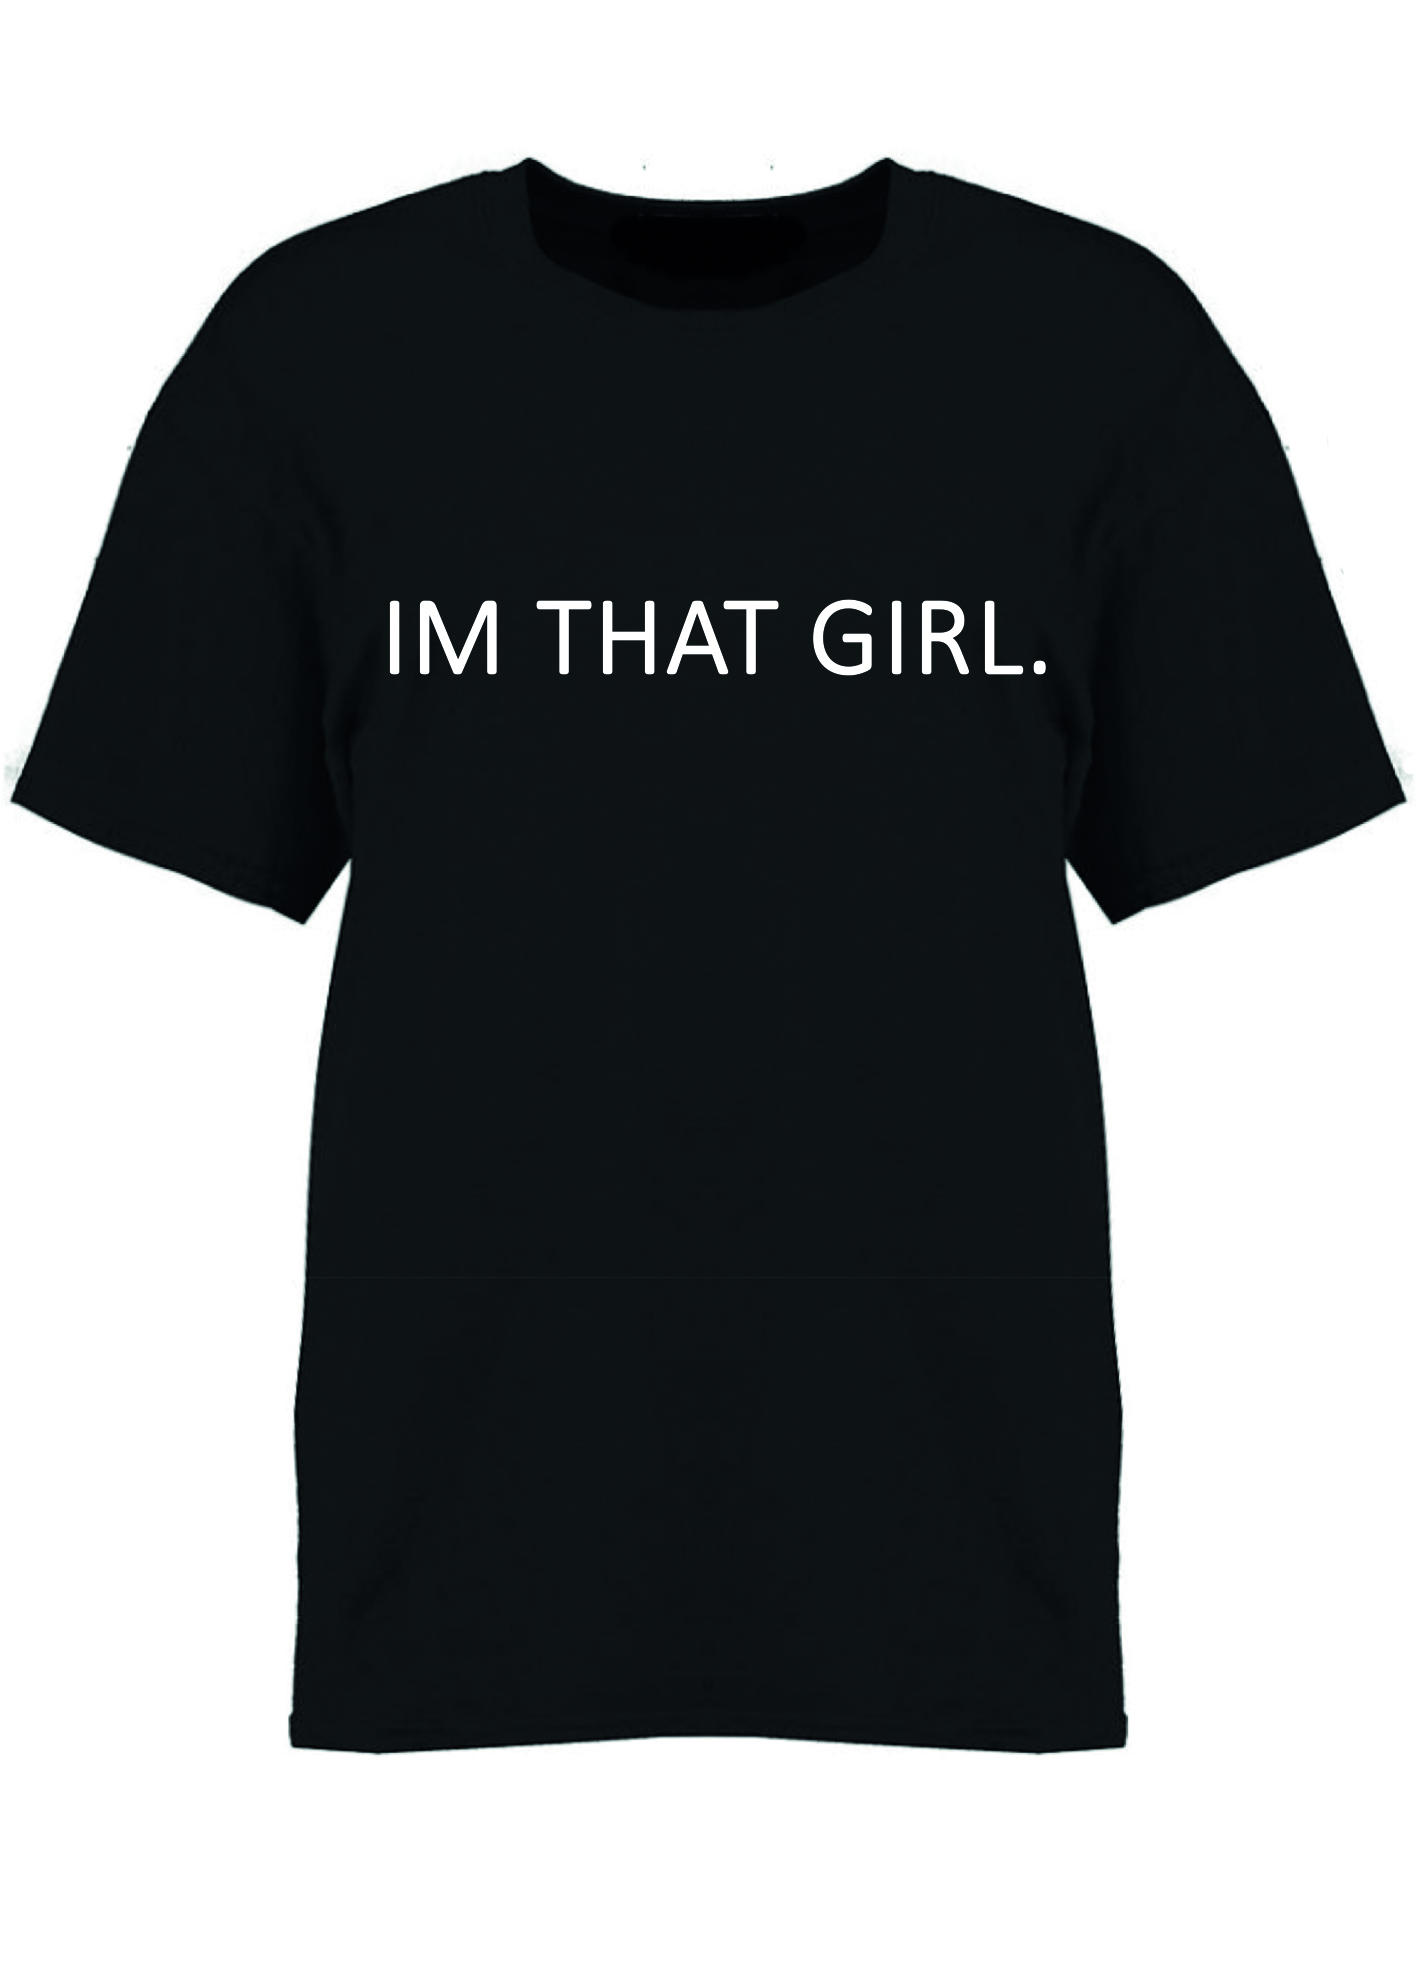 That Girl T-shirt